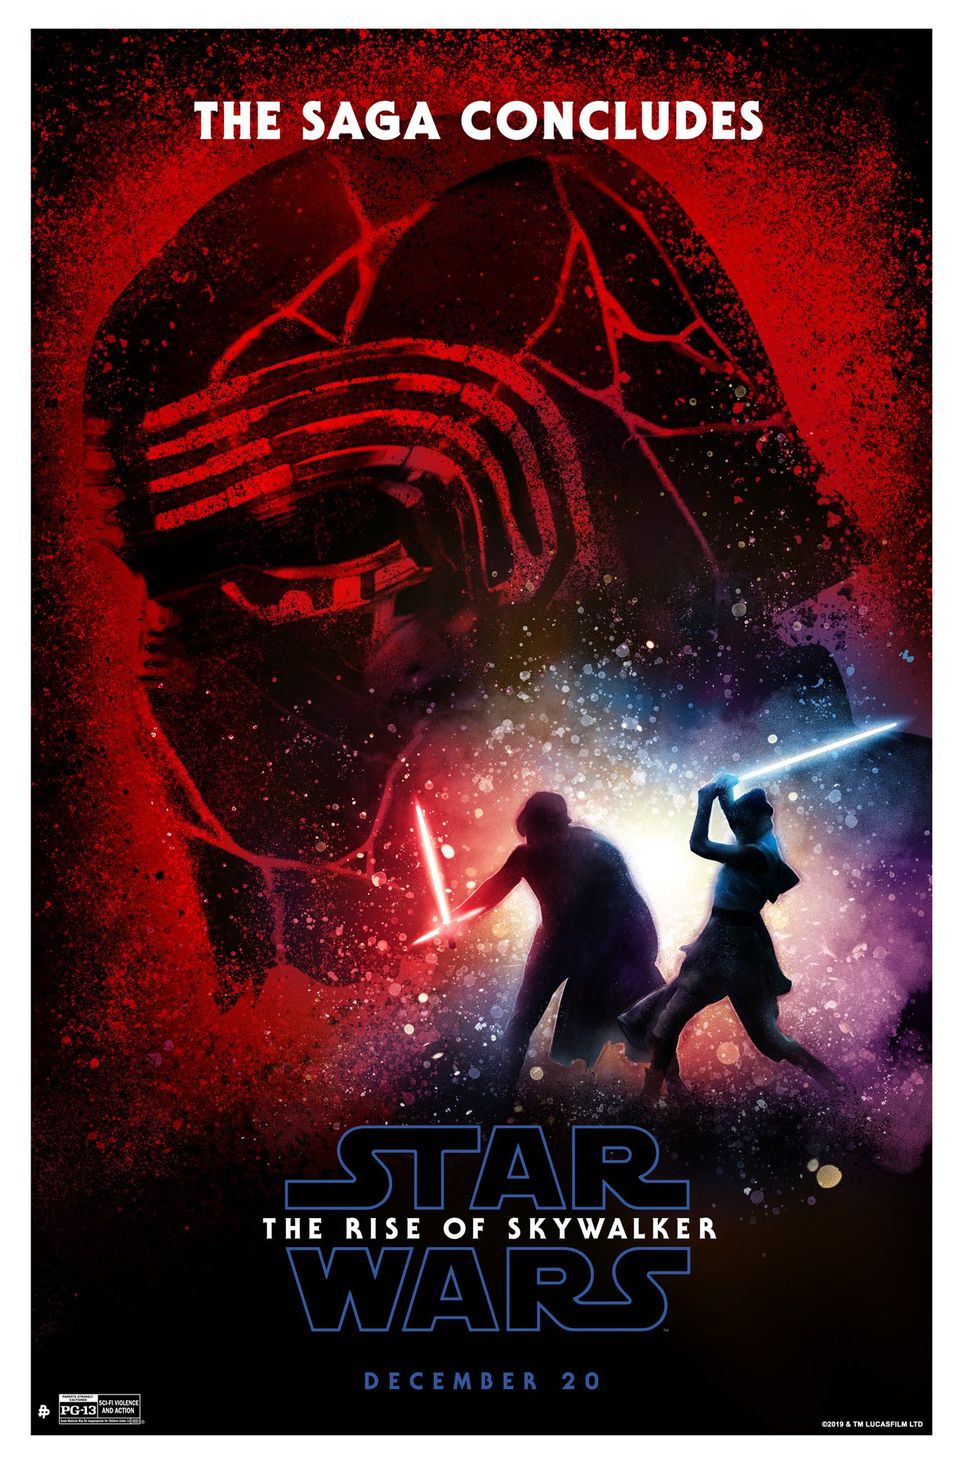 Star Wars the Rise of Skywalker poster